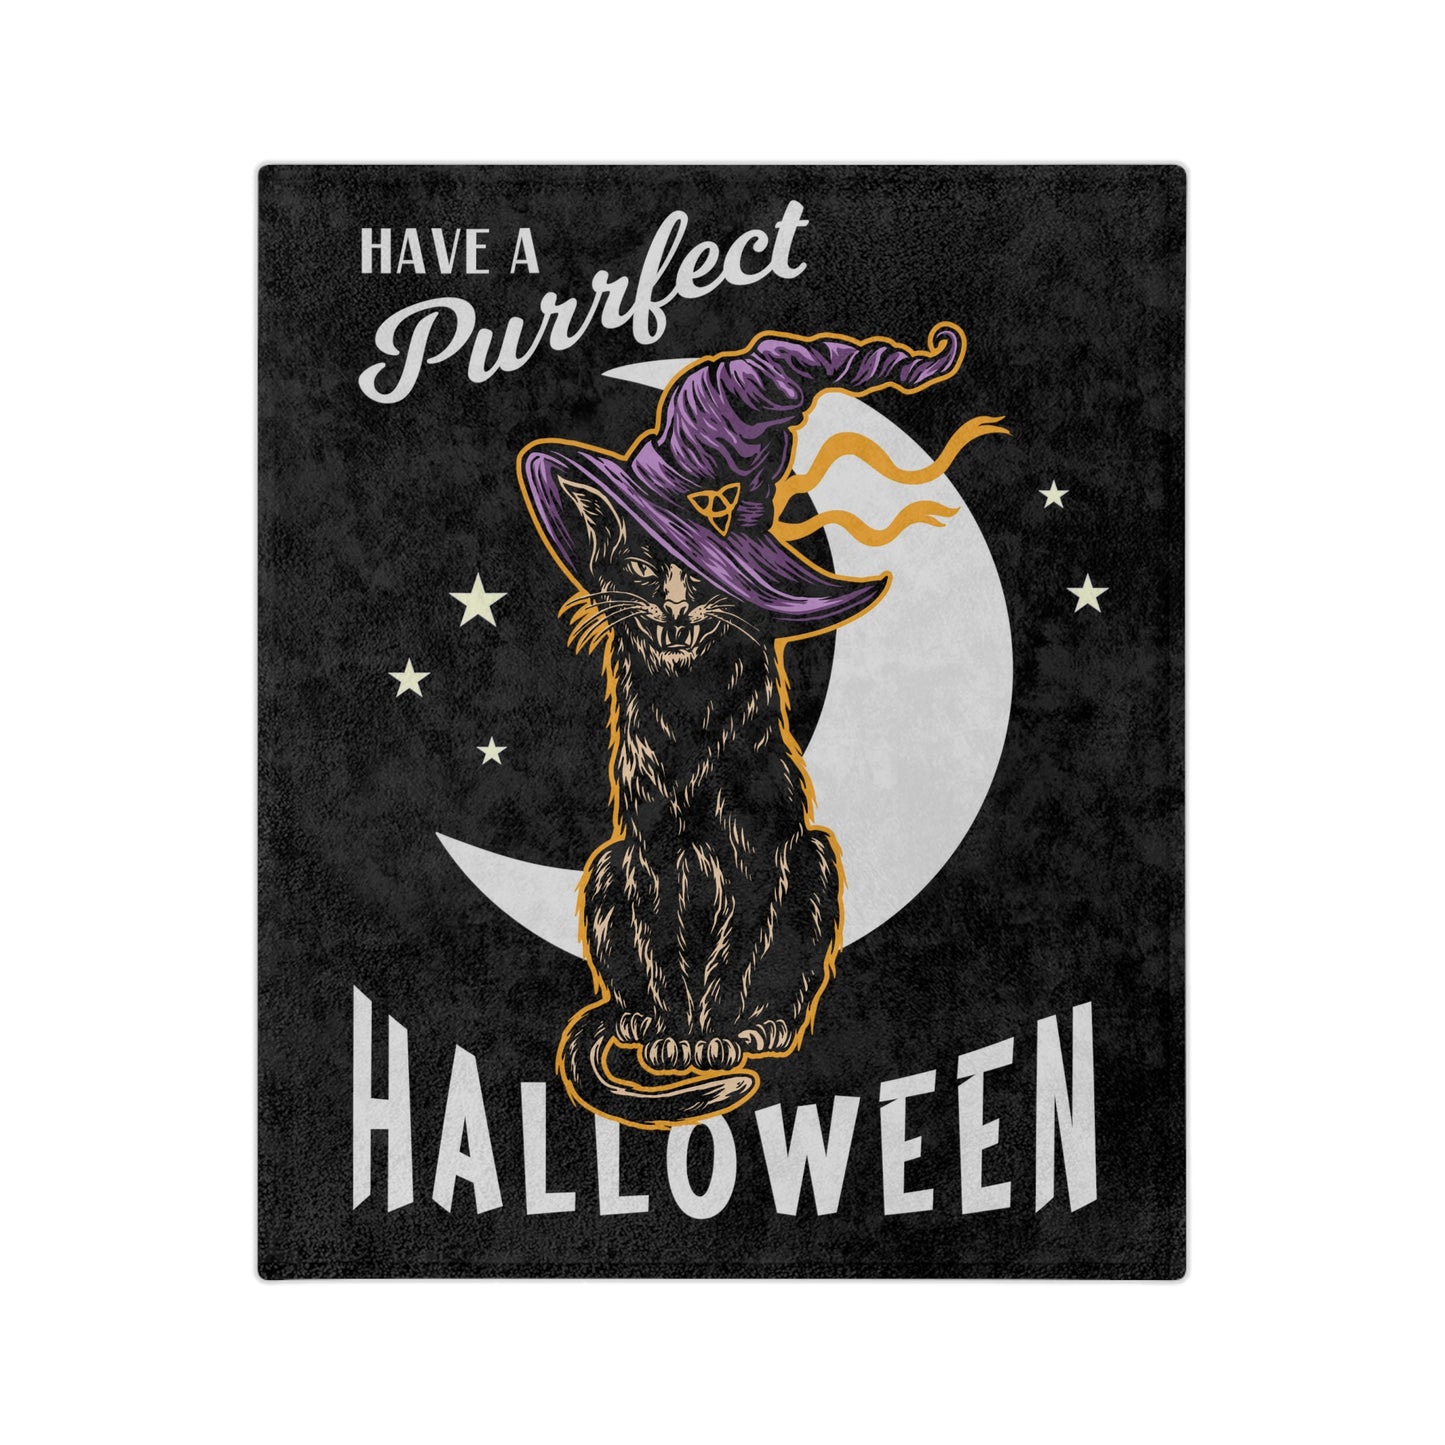 Have a Perfect Halloween Velveteen Minky Blanket